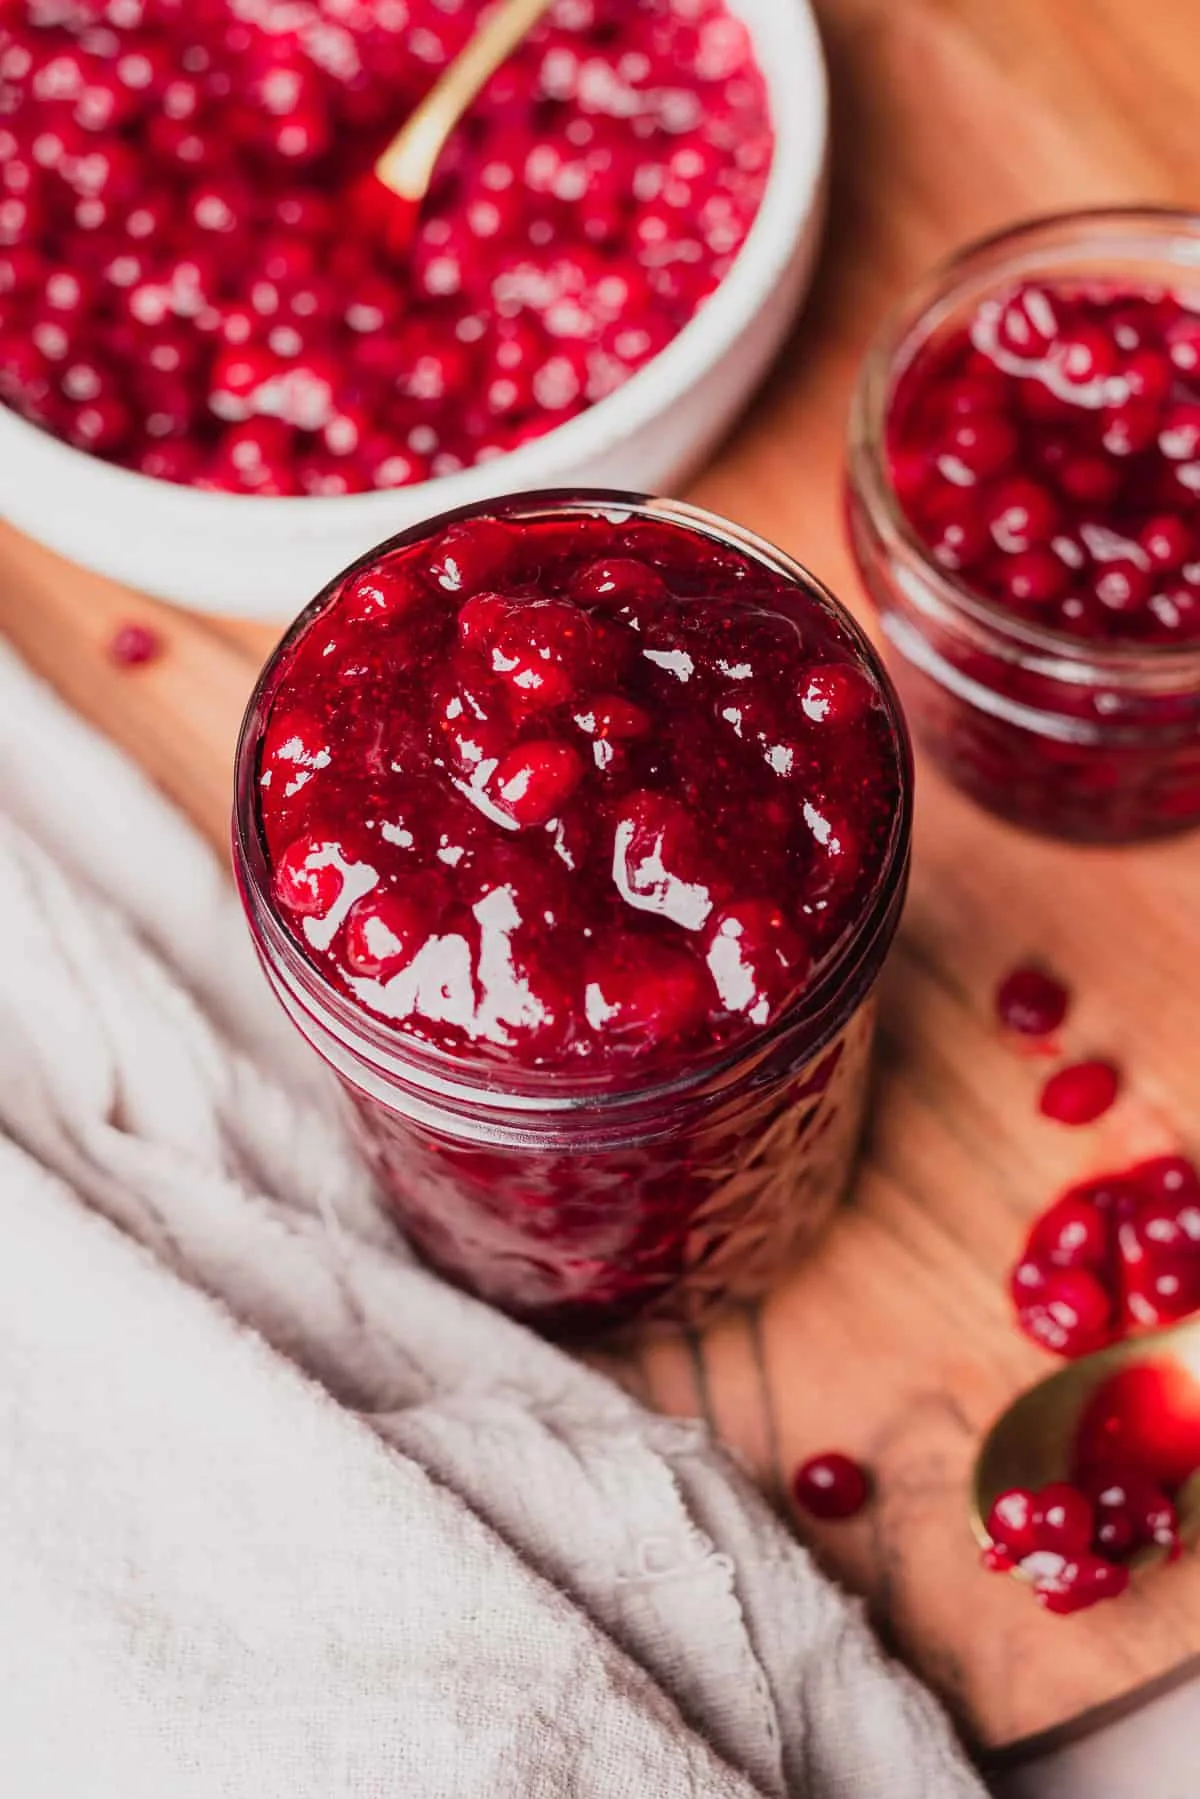 Two jars of lingionberry jam.